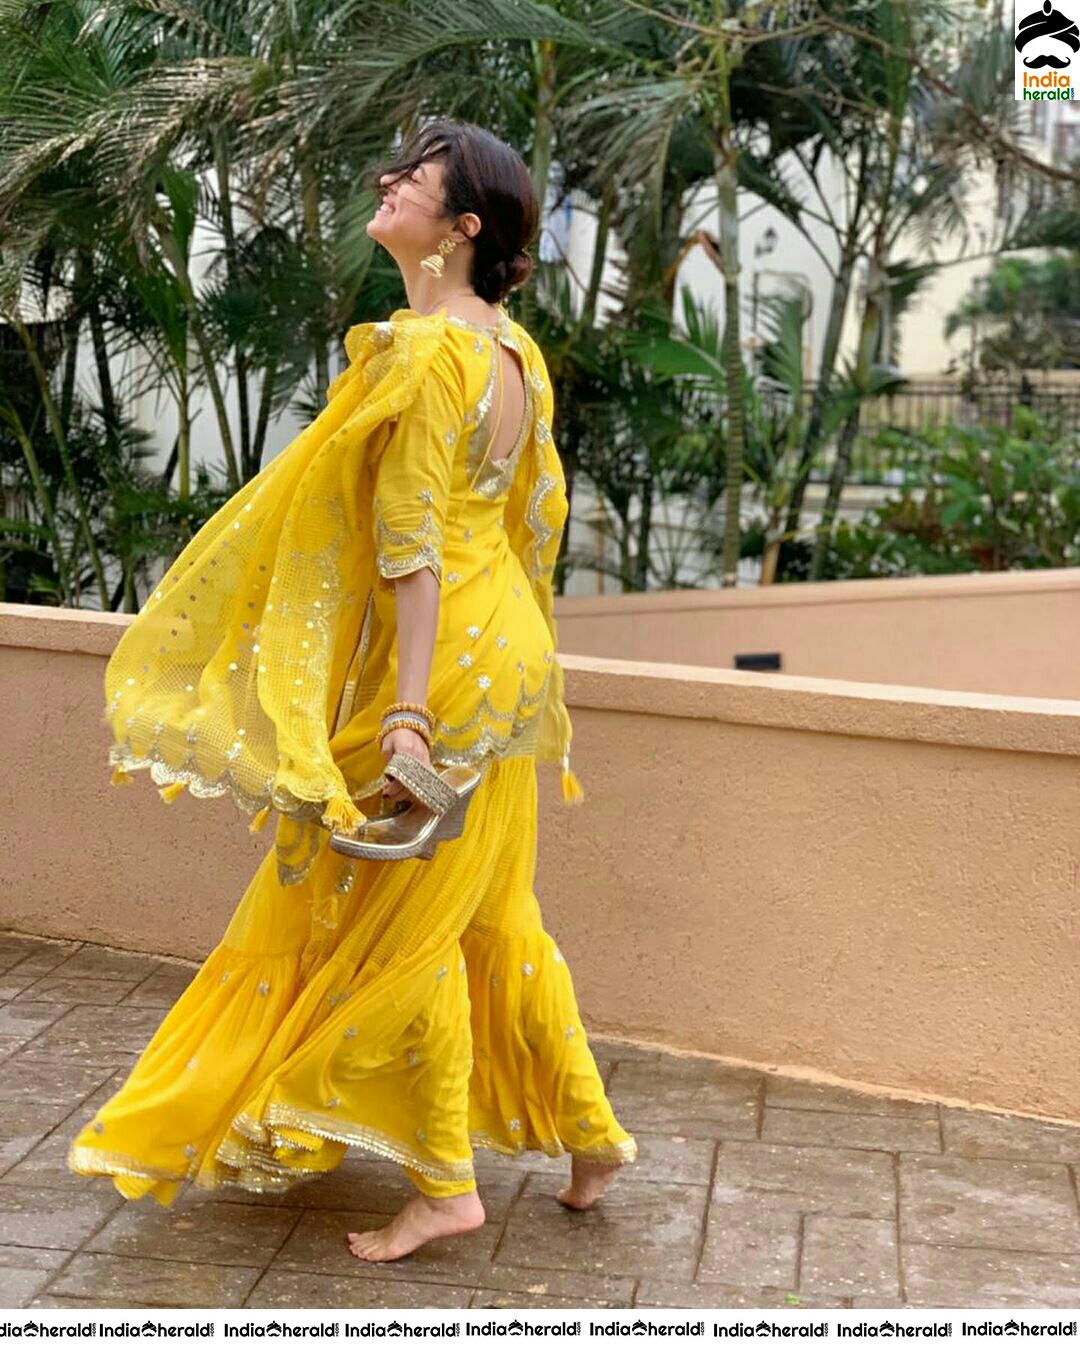 Divya Khosla Kumar Looking So Pretty And Gorgeous In Yellow